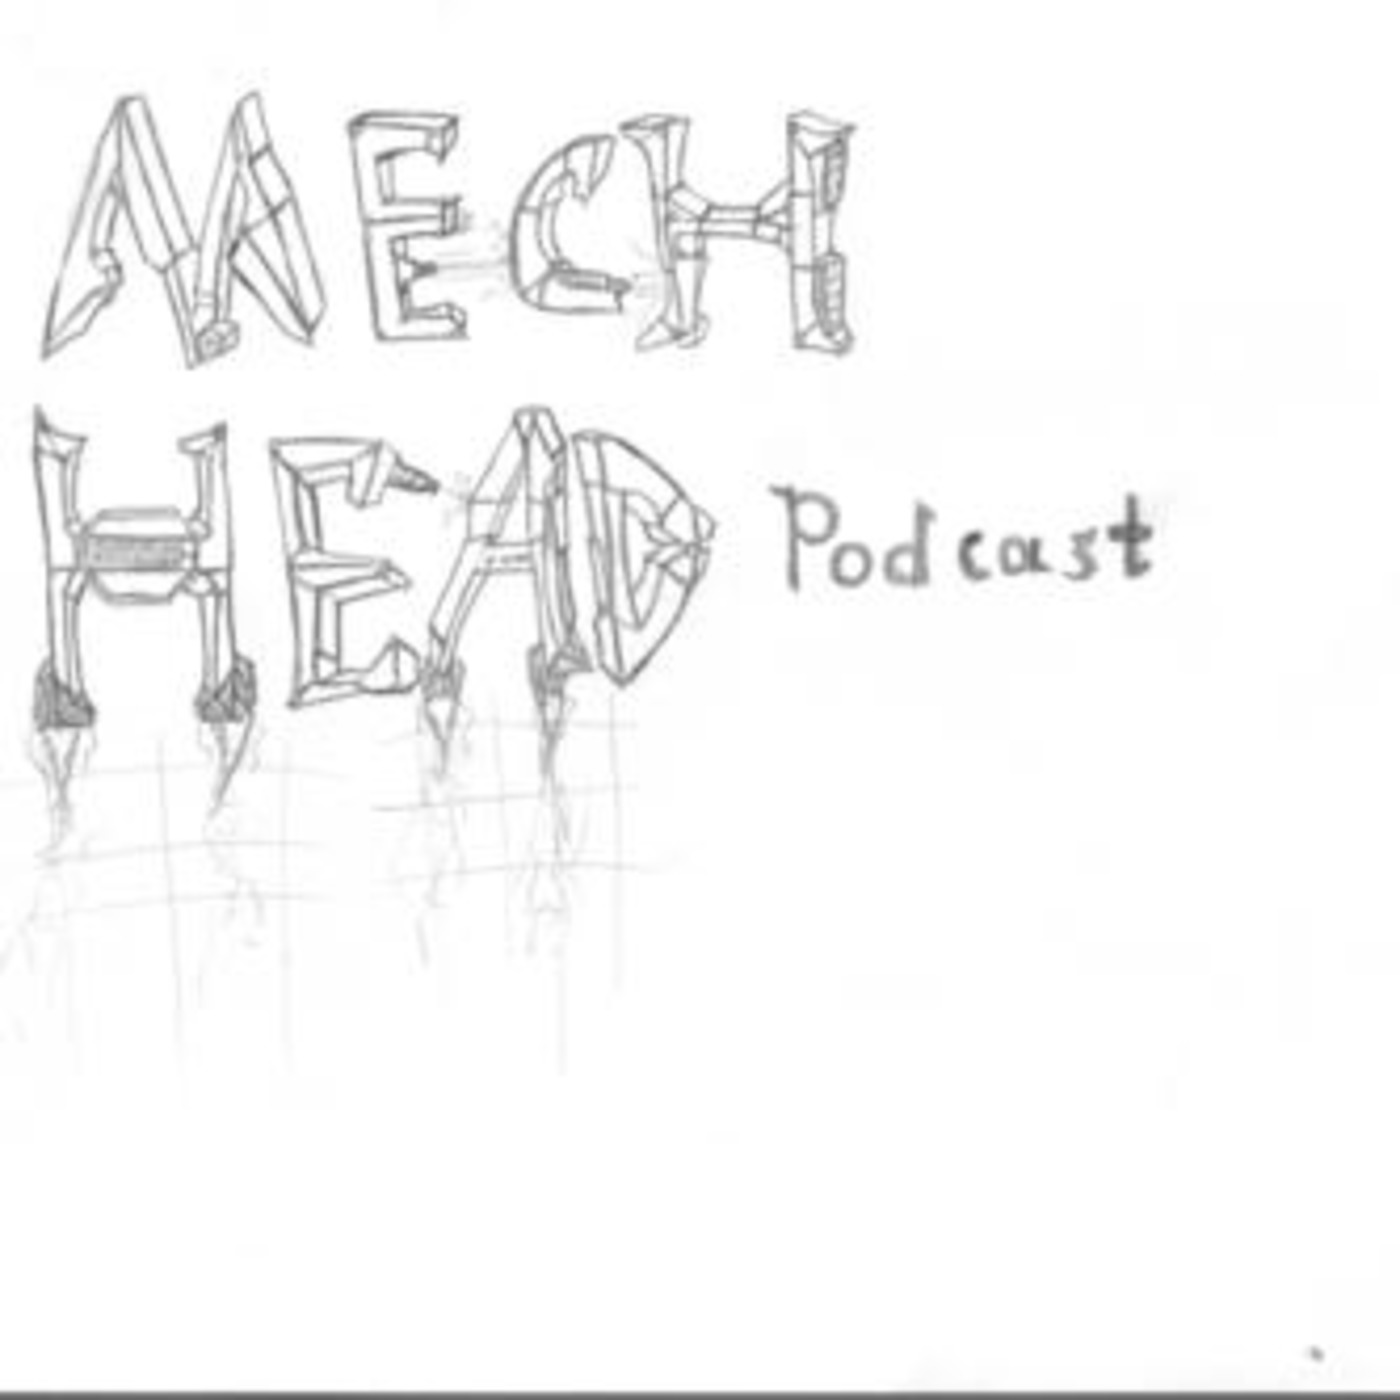 MechHead Podcast #24!